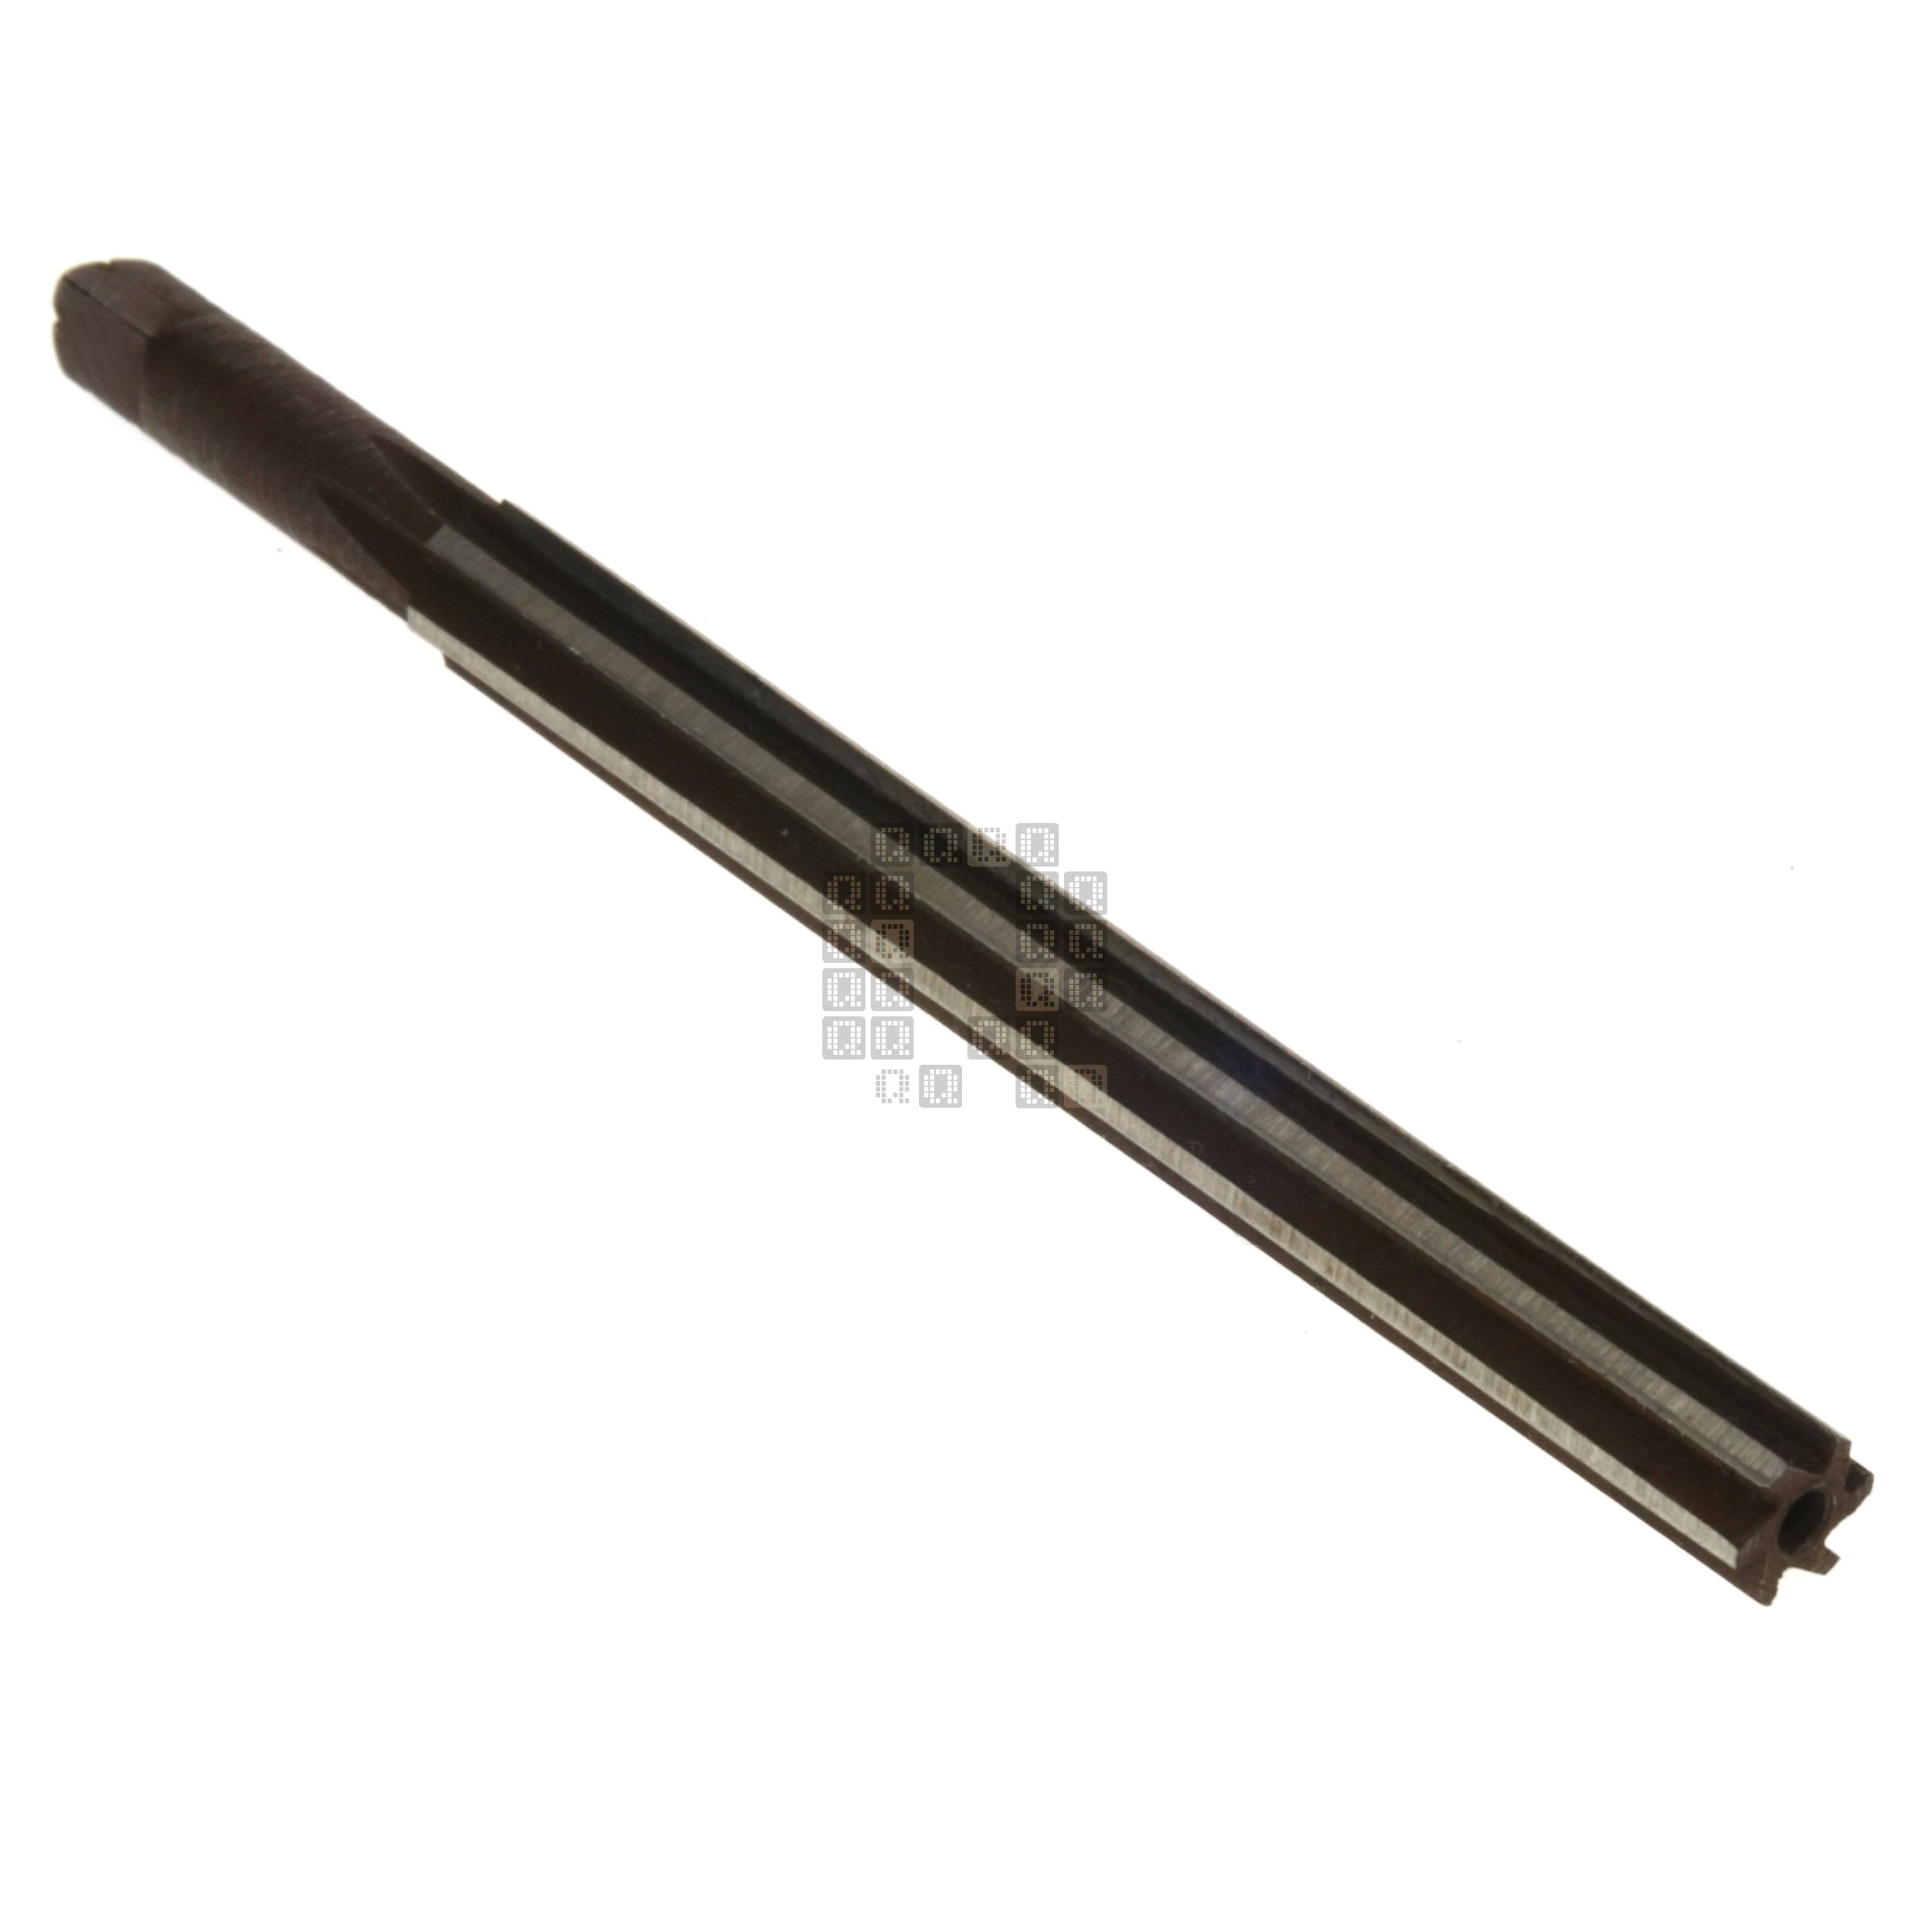 Metric Hand Reamer, 1:50 Taper - 6 to 8mm, 95mm Length